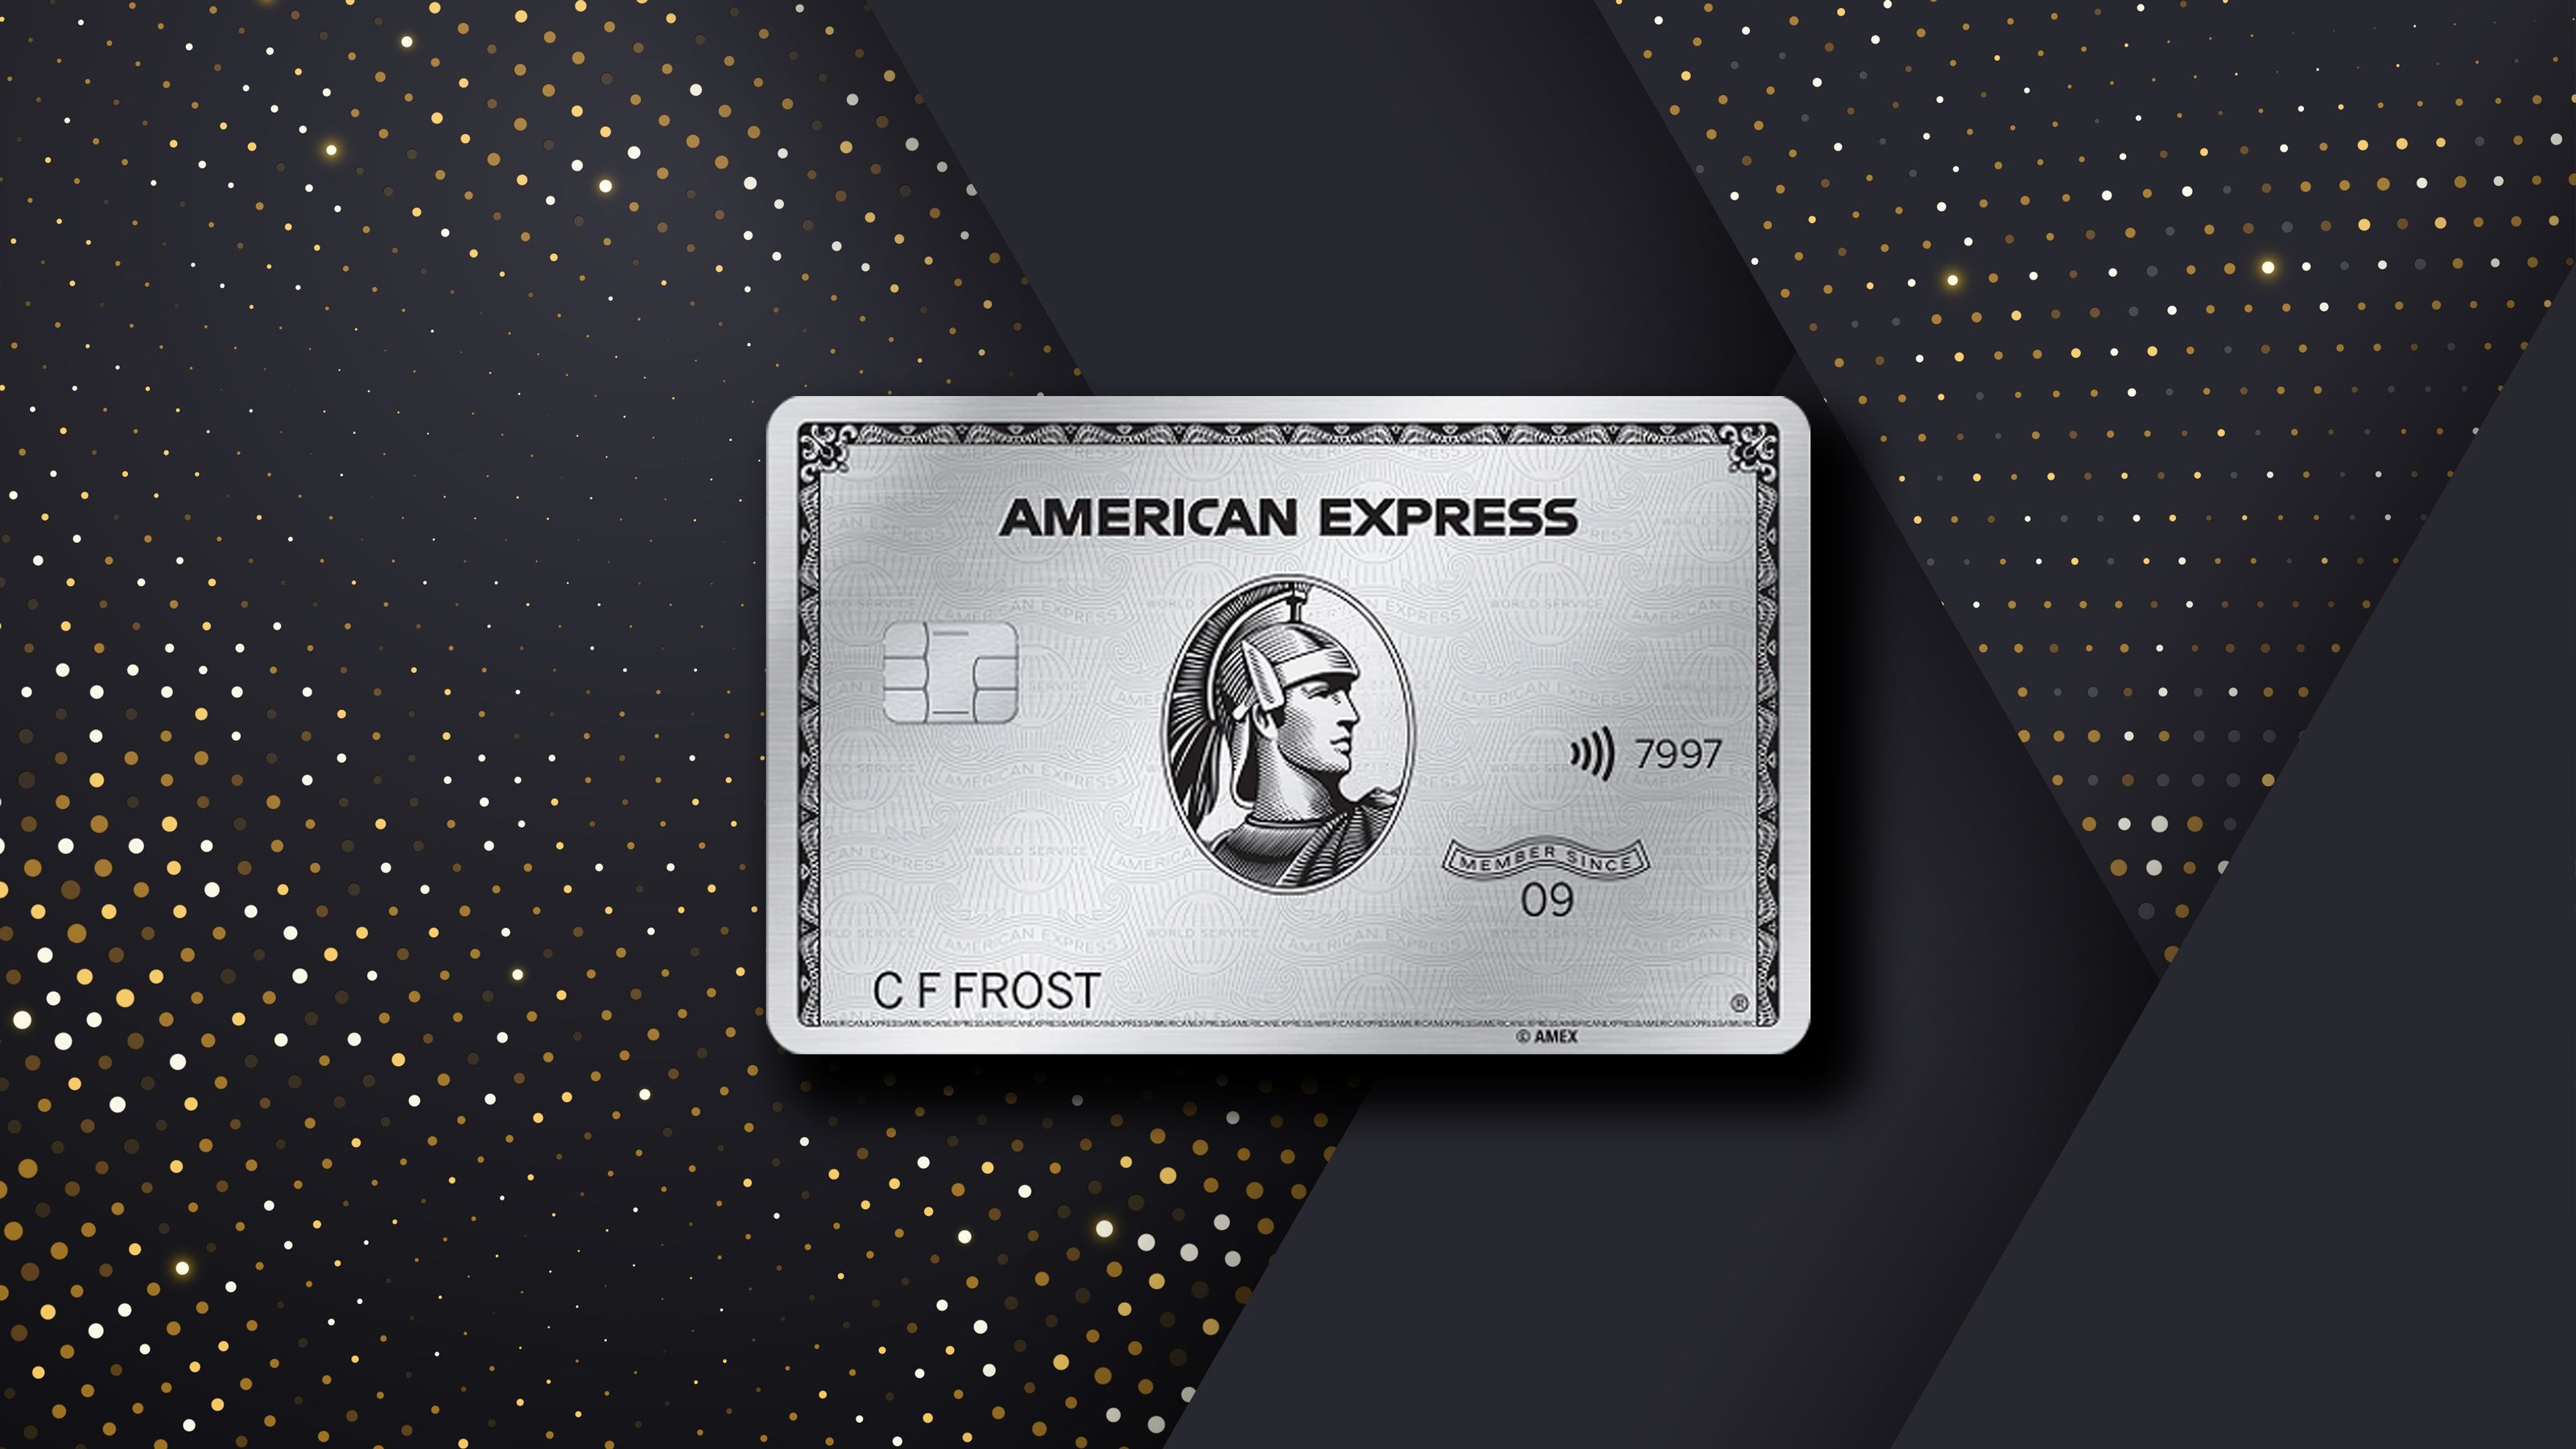 American Express Platinum card review: Luxury travel perks | CNN Underscored